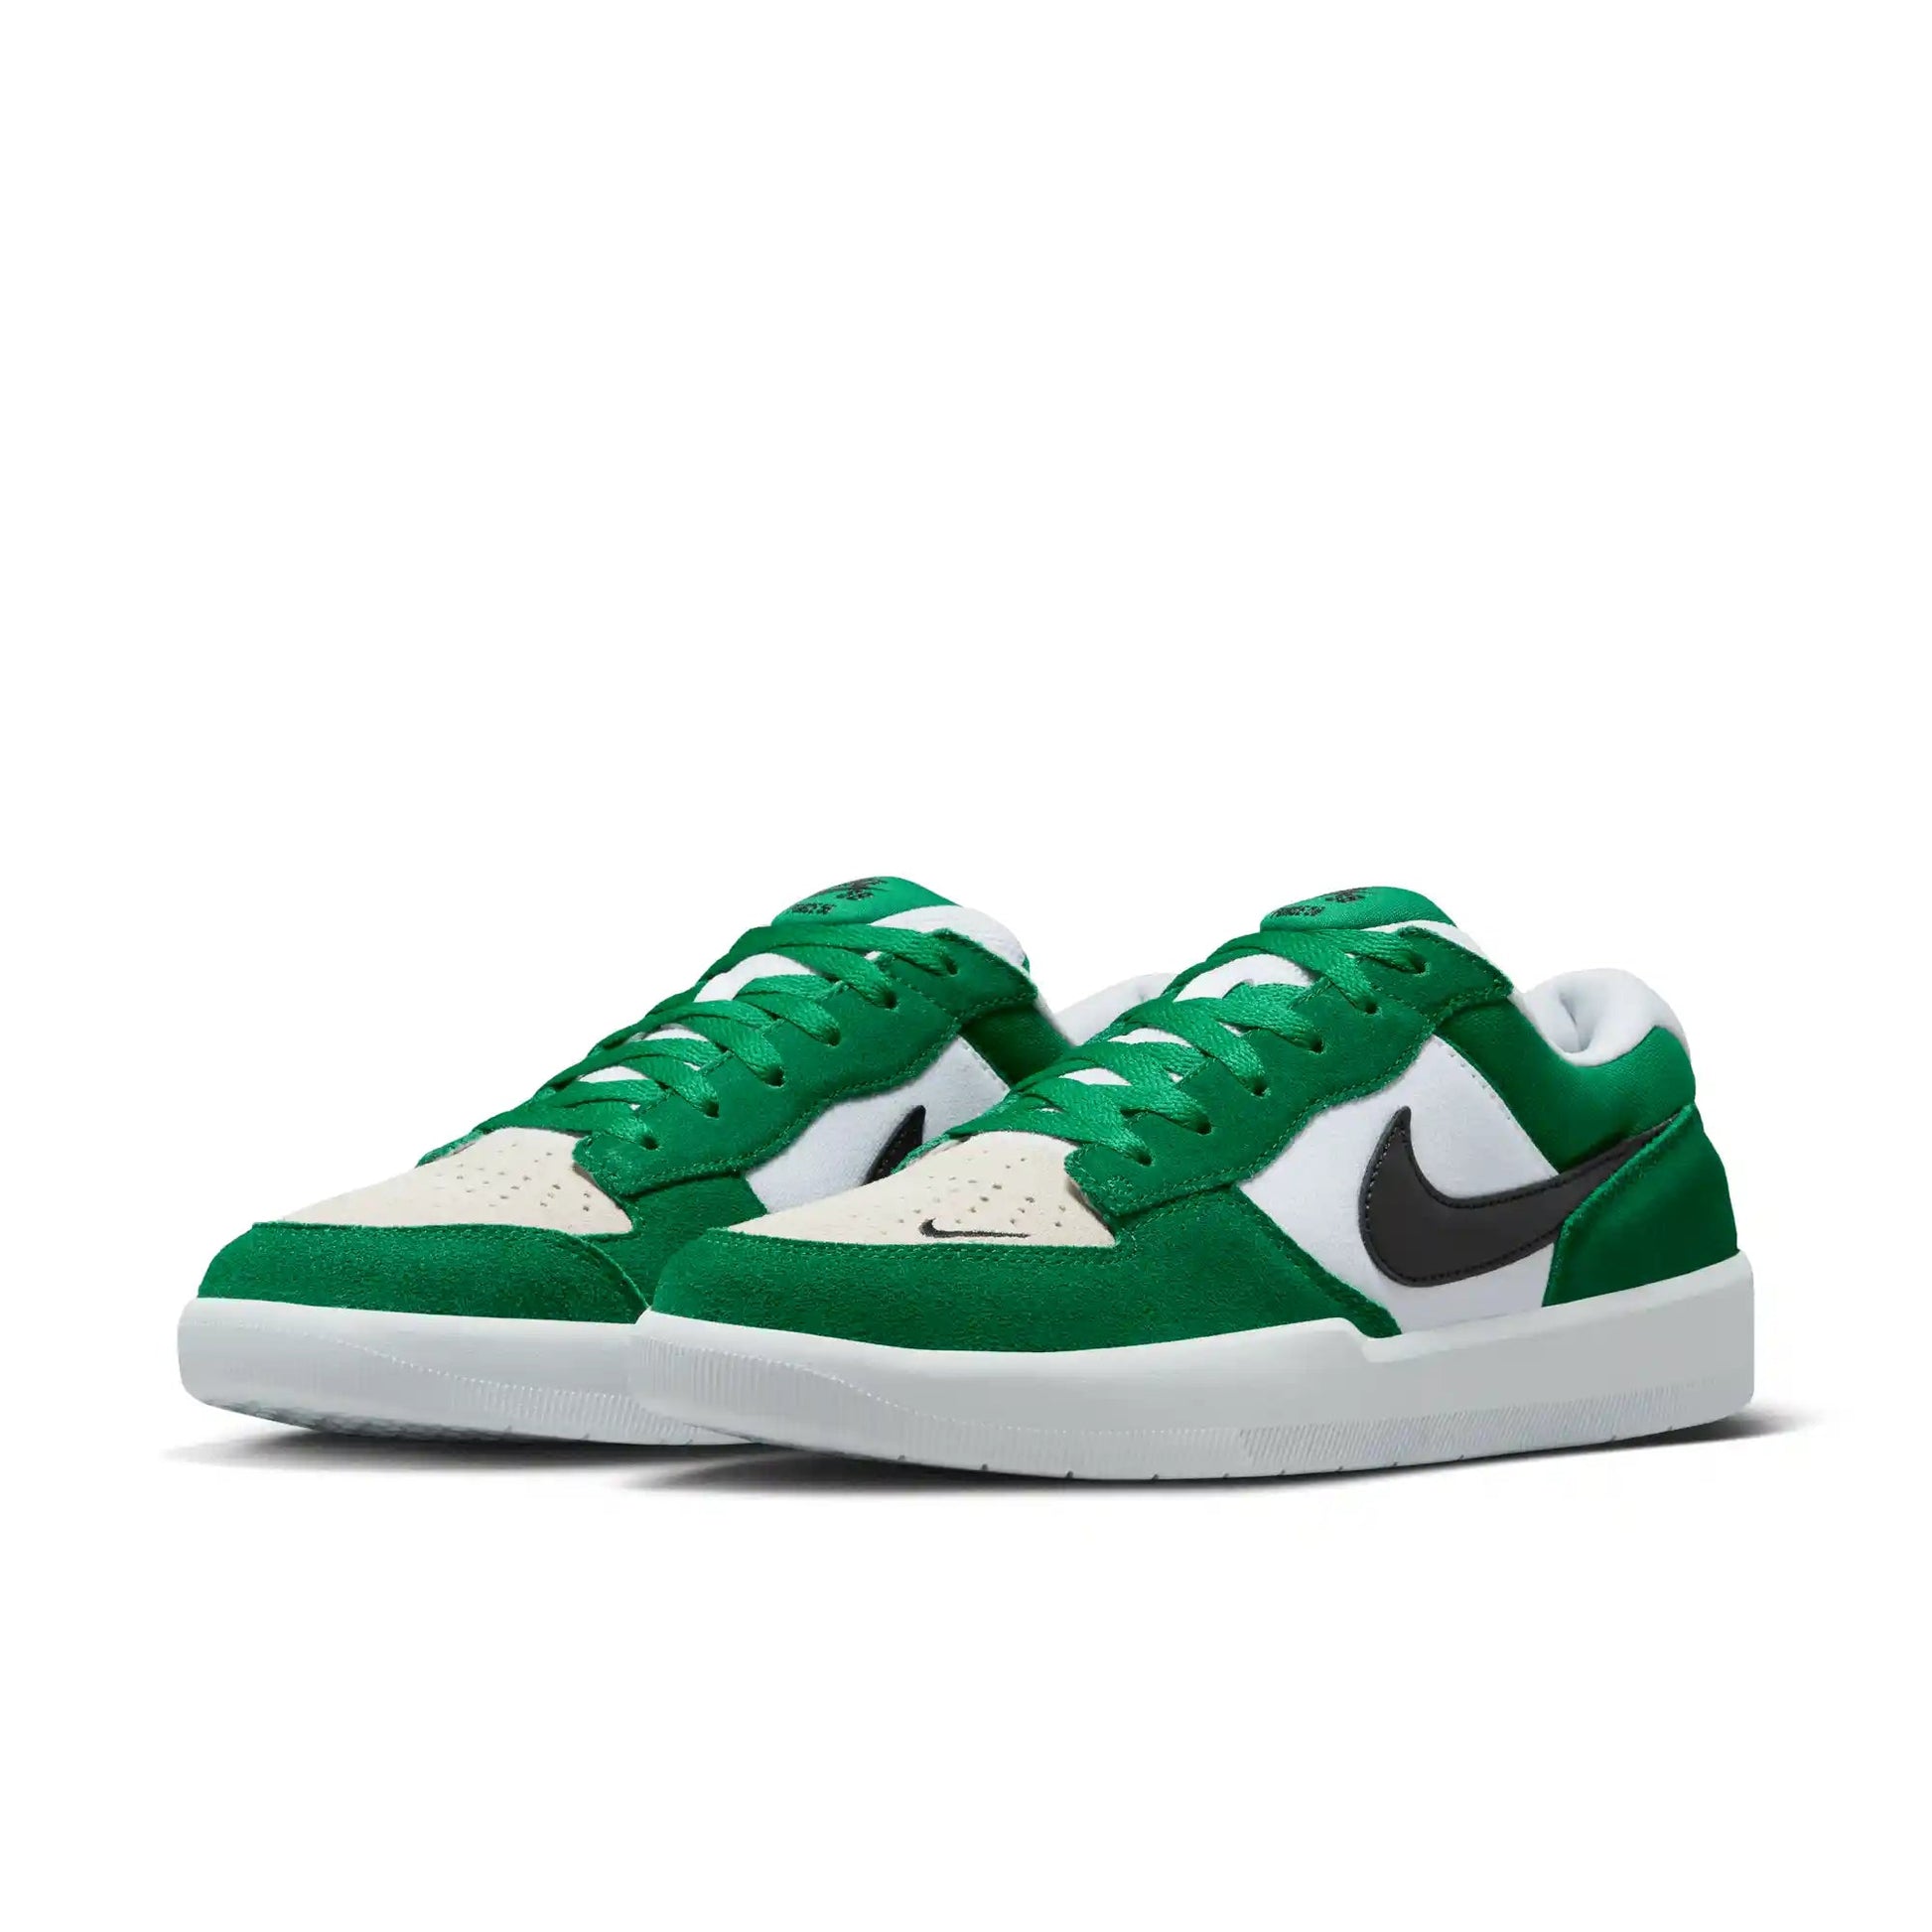 Nike SB Force 58, pine green/black-white-white - Tiki Room Skateboards - 2